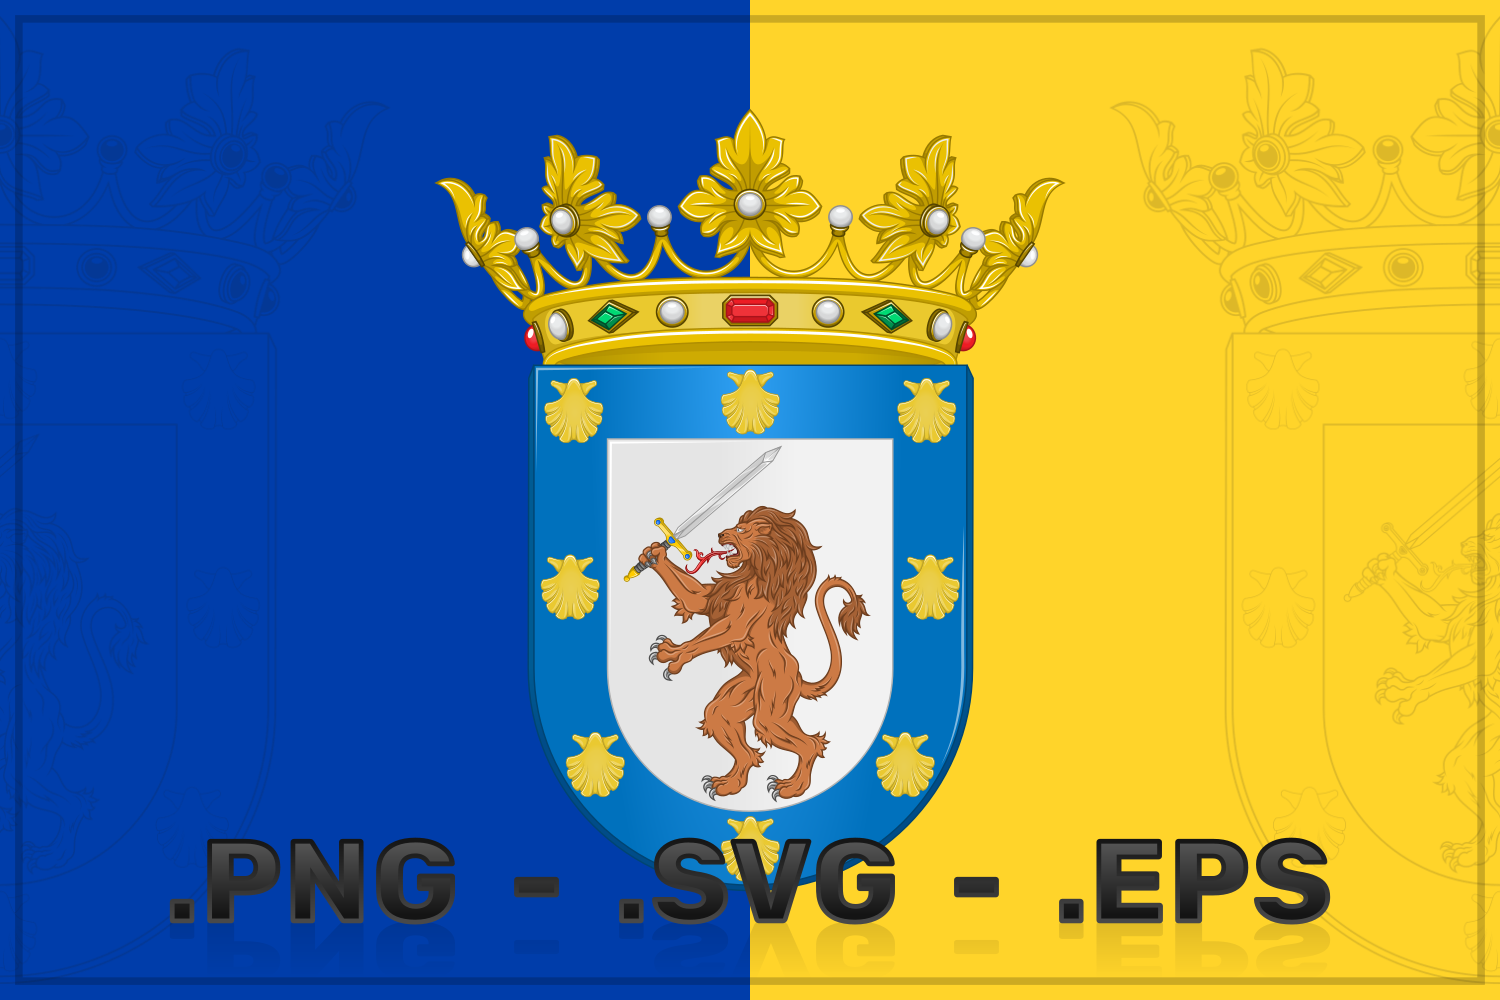 Vector Design Of The Coat Of Arms Of Santiago De Chile